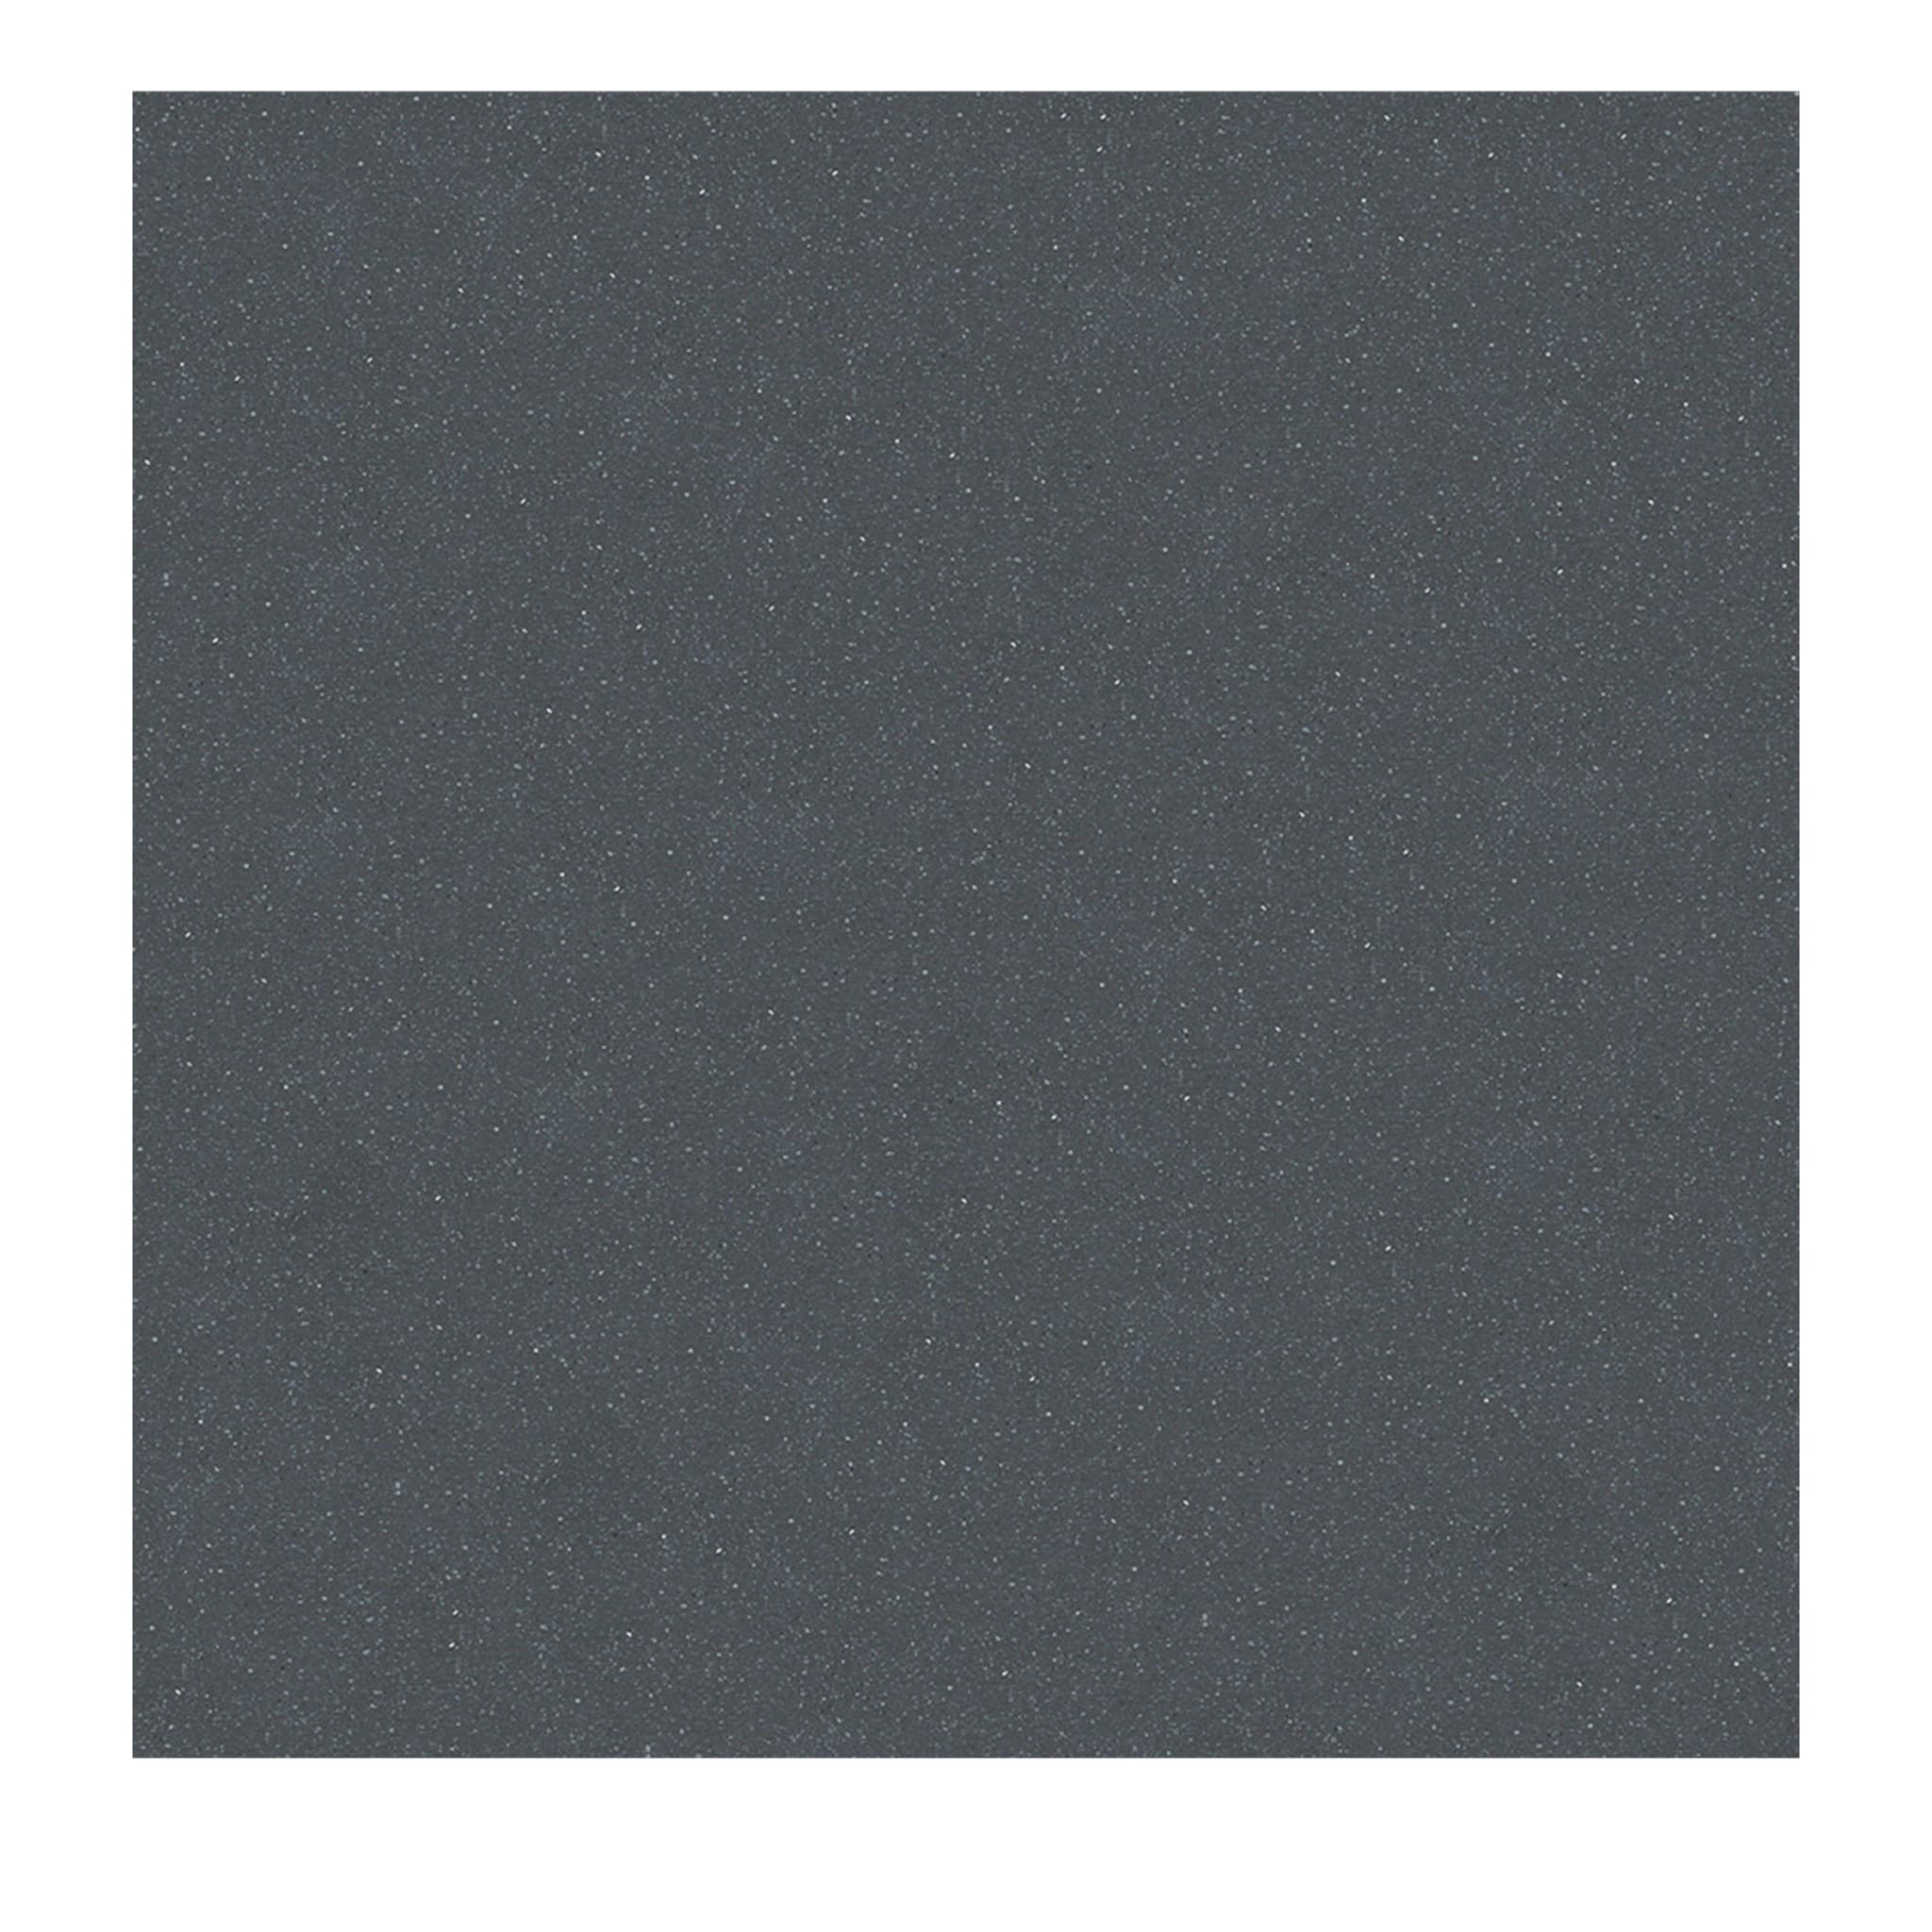 America Set of 25 Black Concrete Tiles - Main view